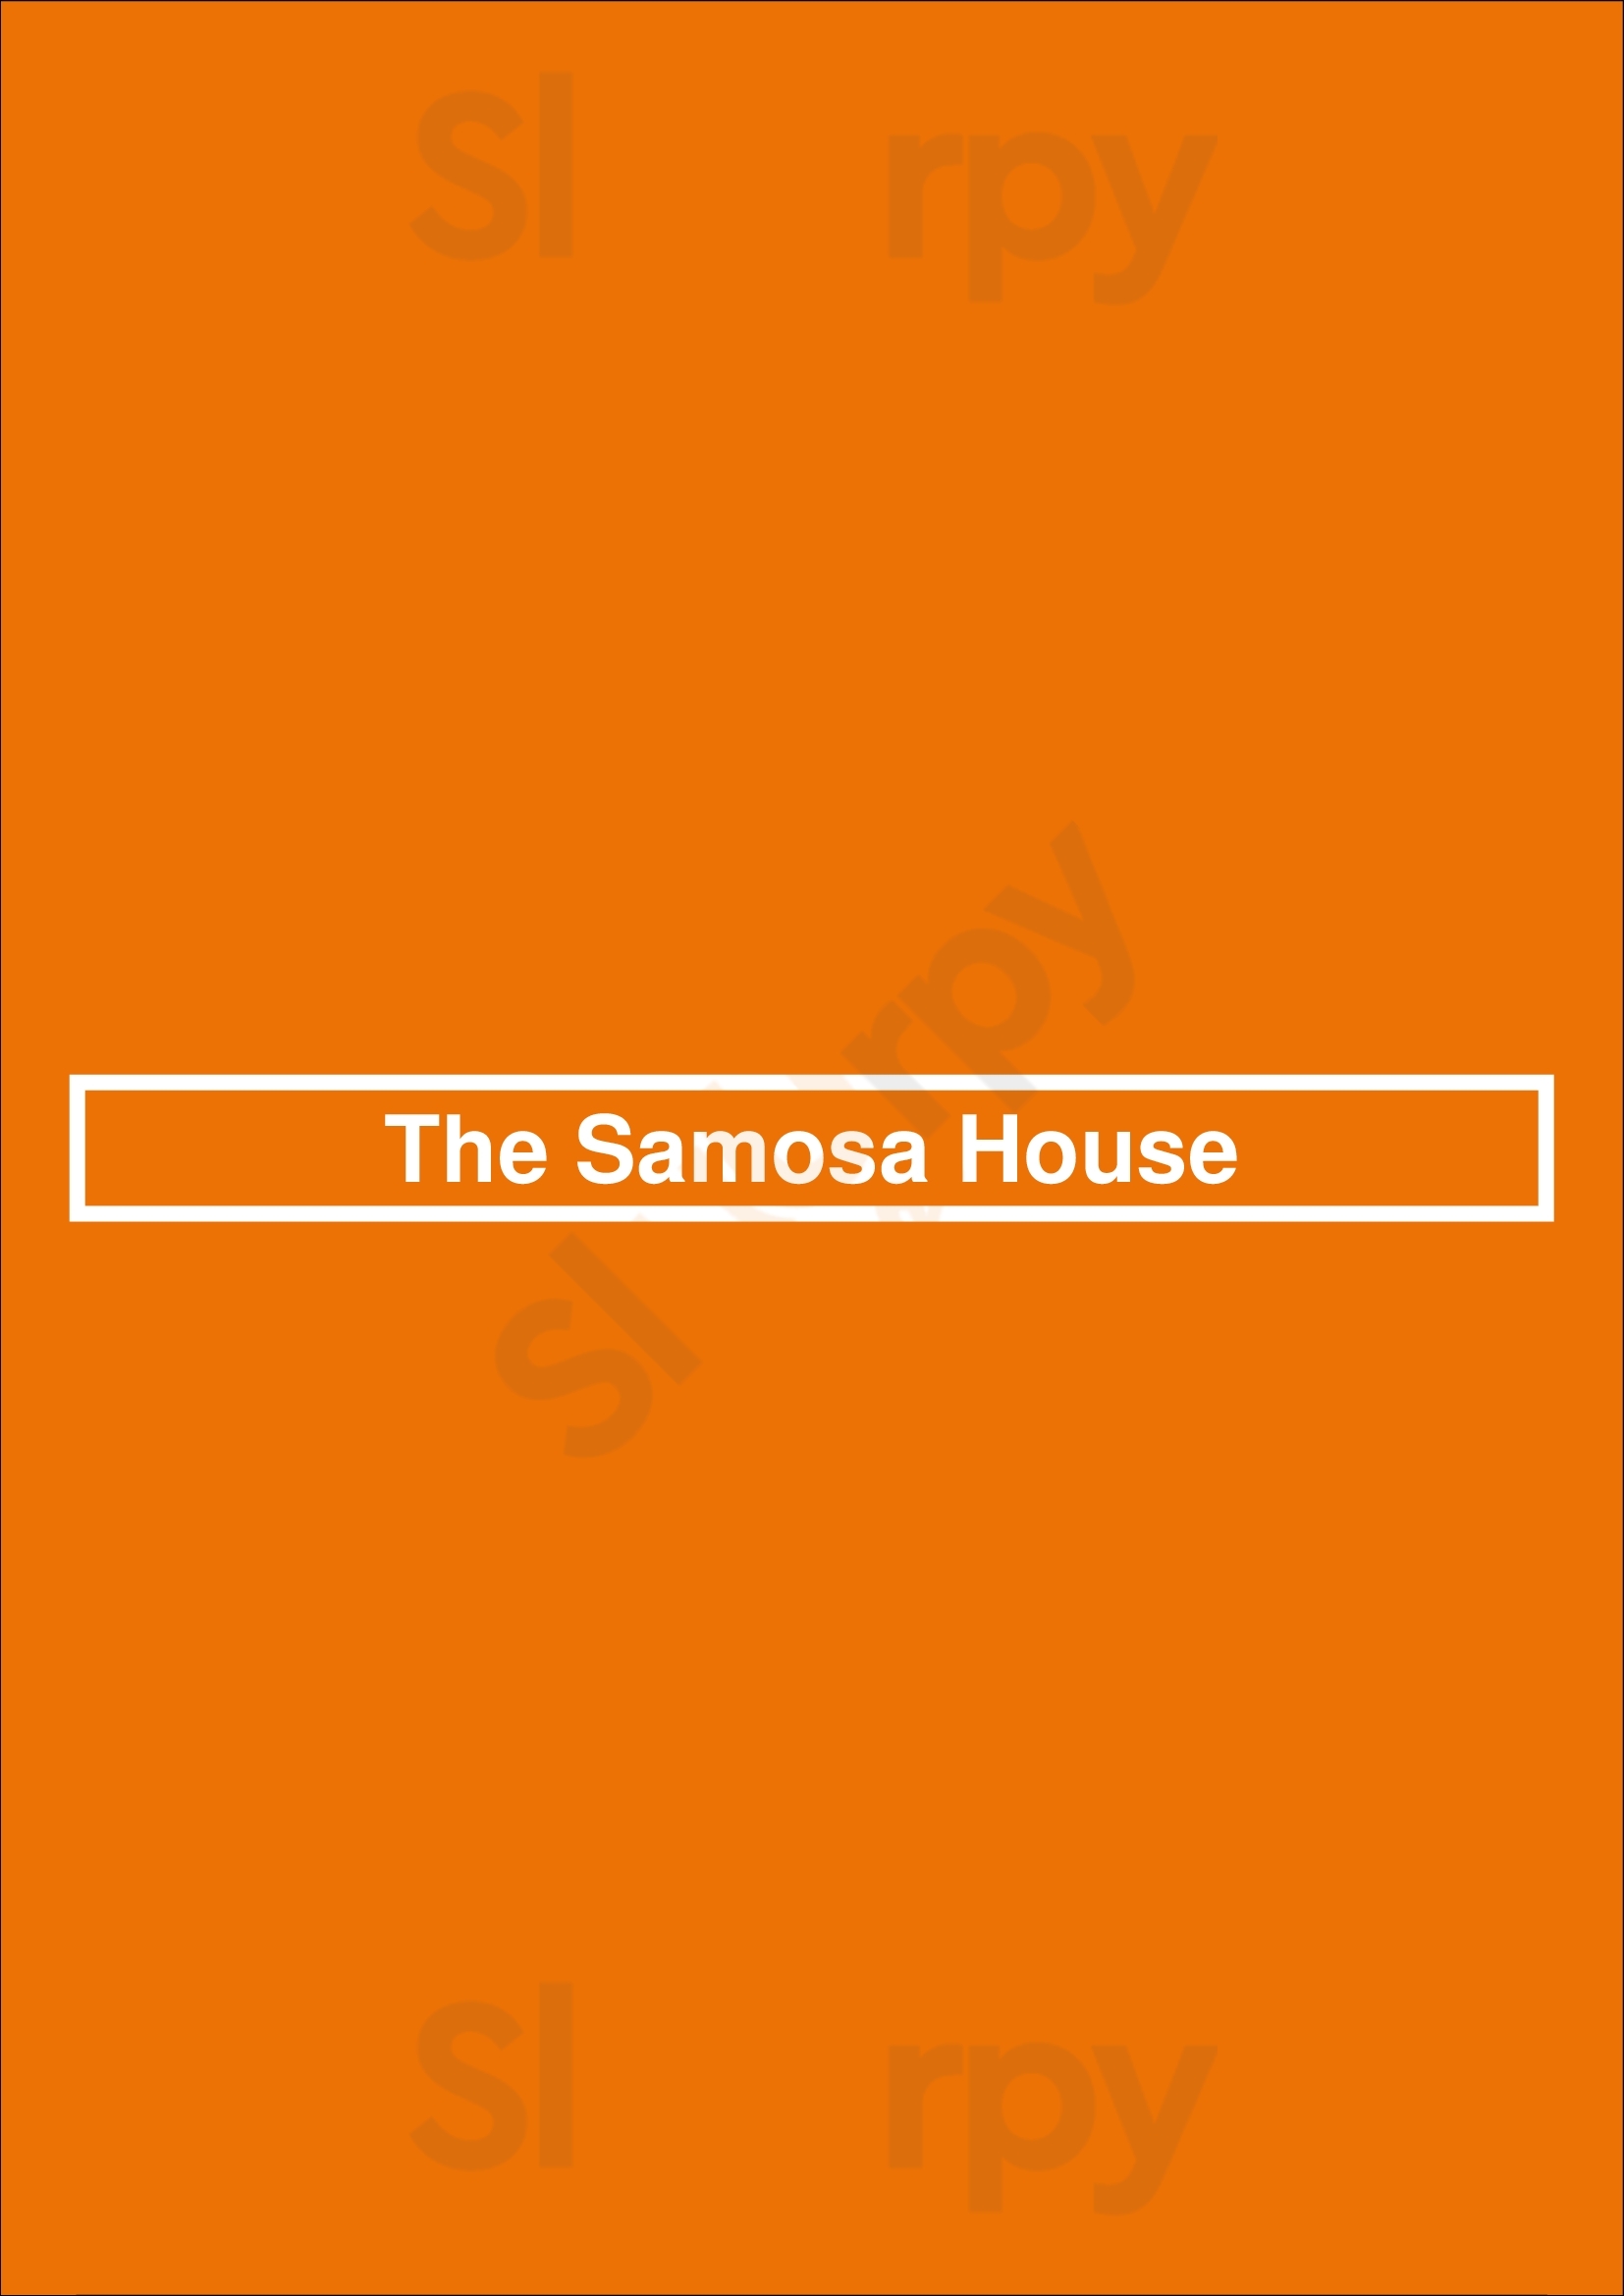 The Samosa House Surrey Menu - 1